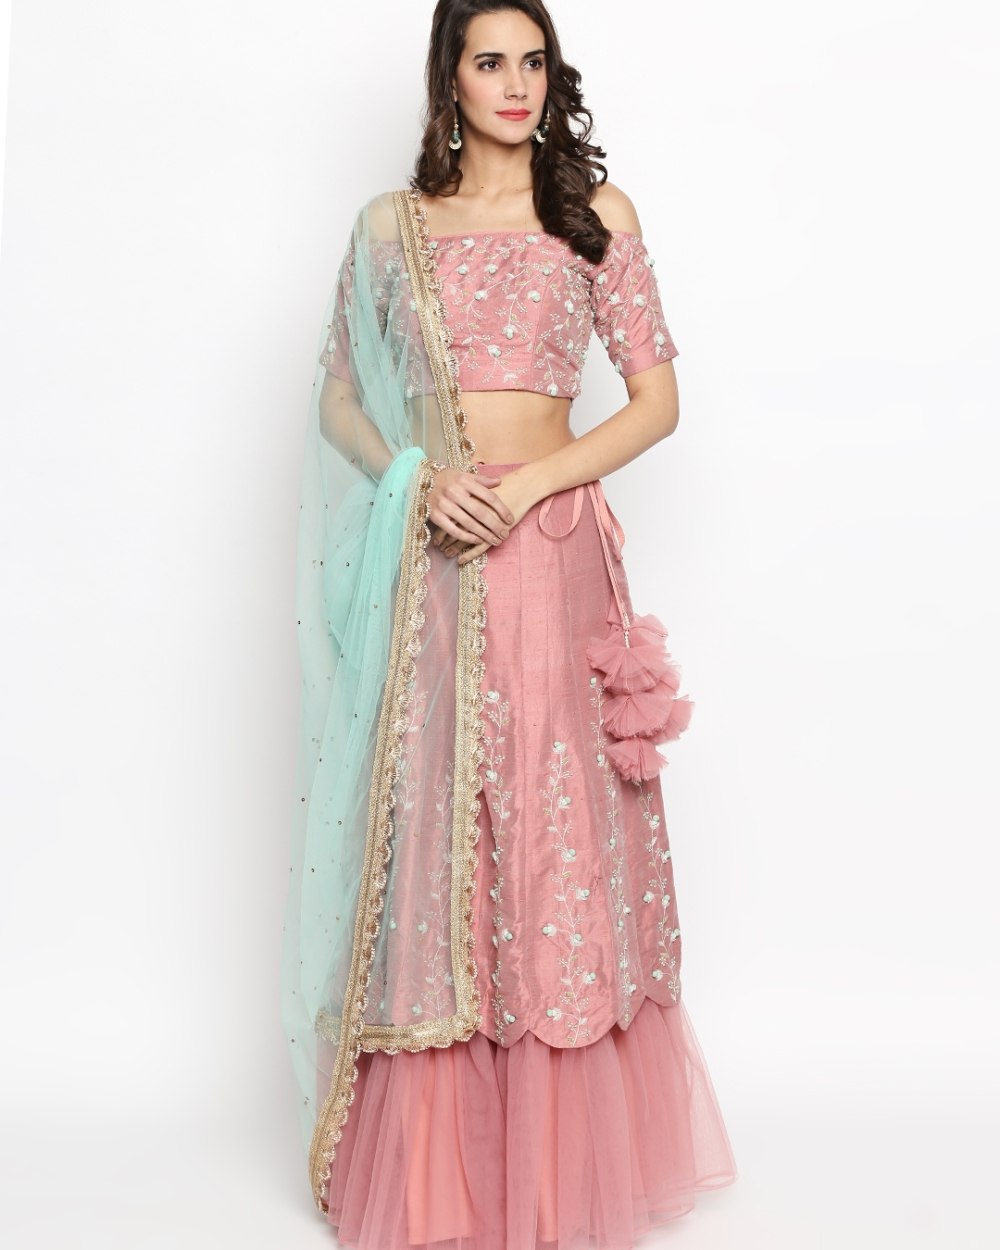 Rouge Pink Ruffle Lehenga - Fashion Brand & Designer Priti Sahni 2